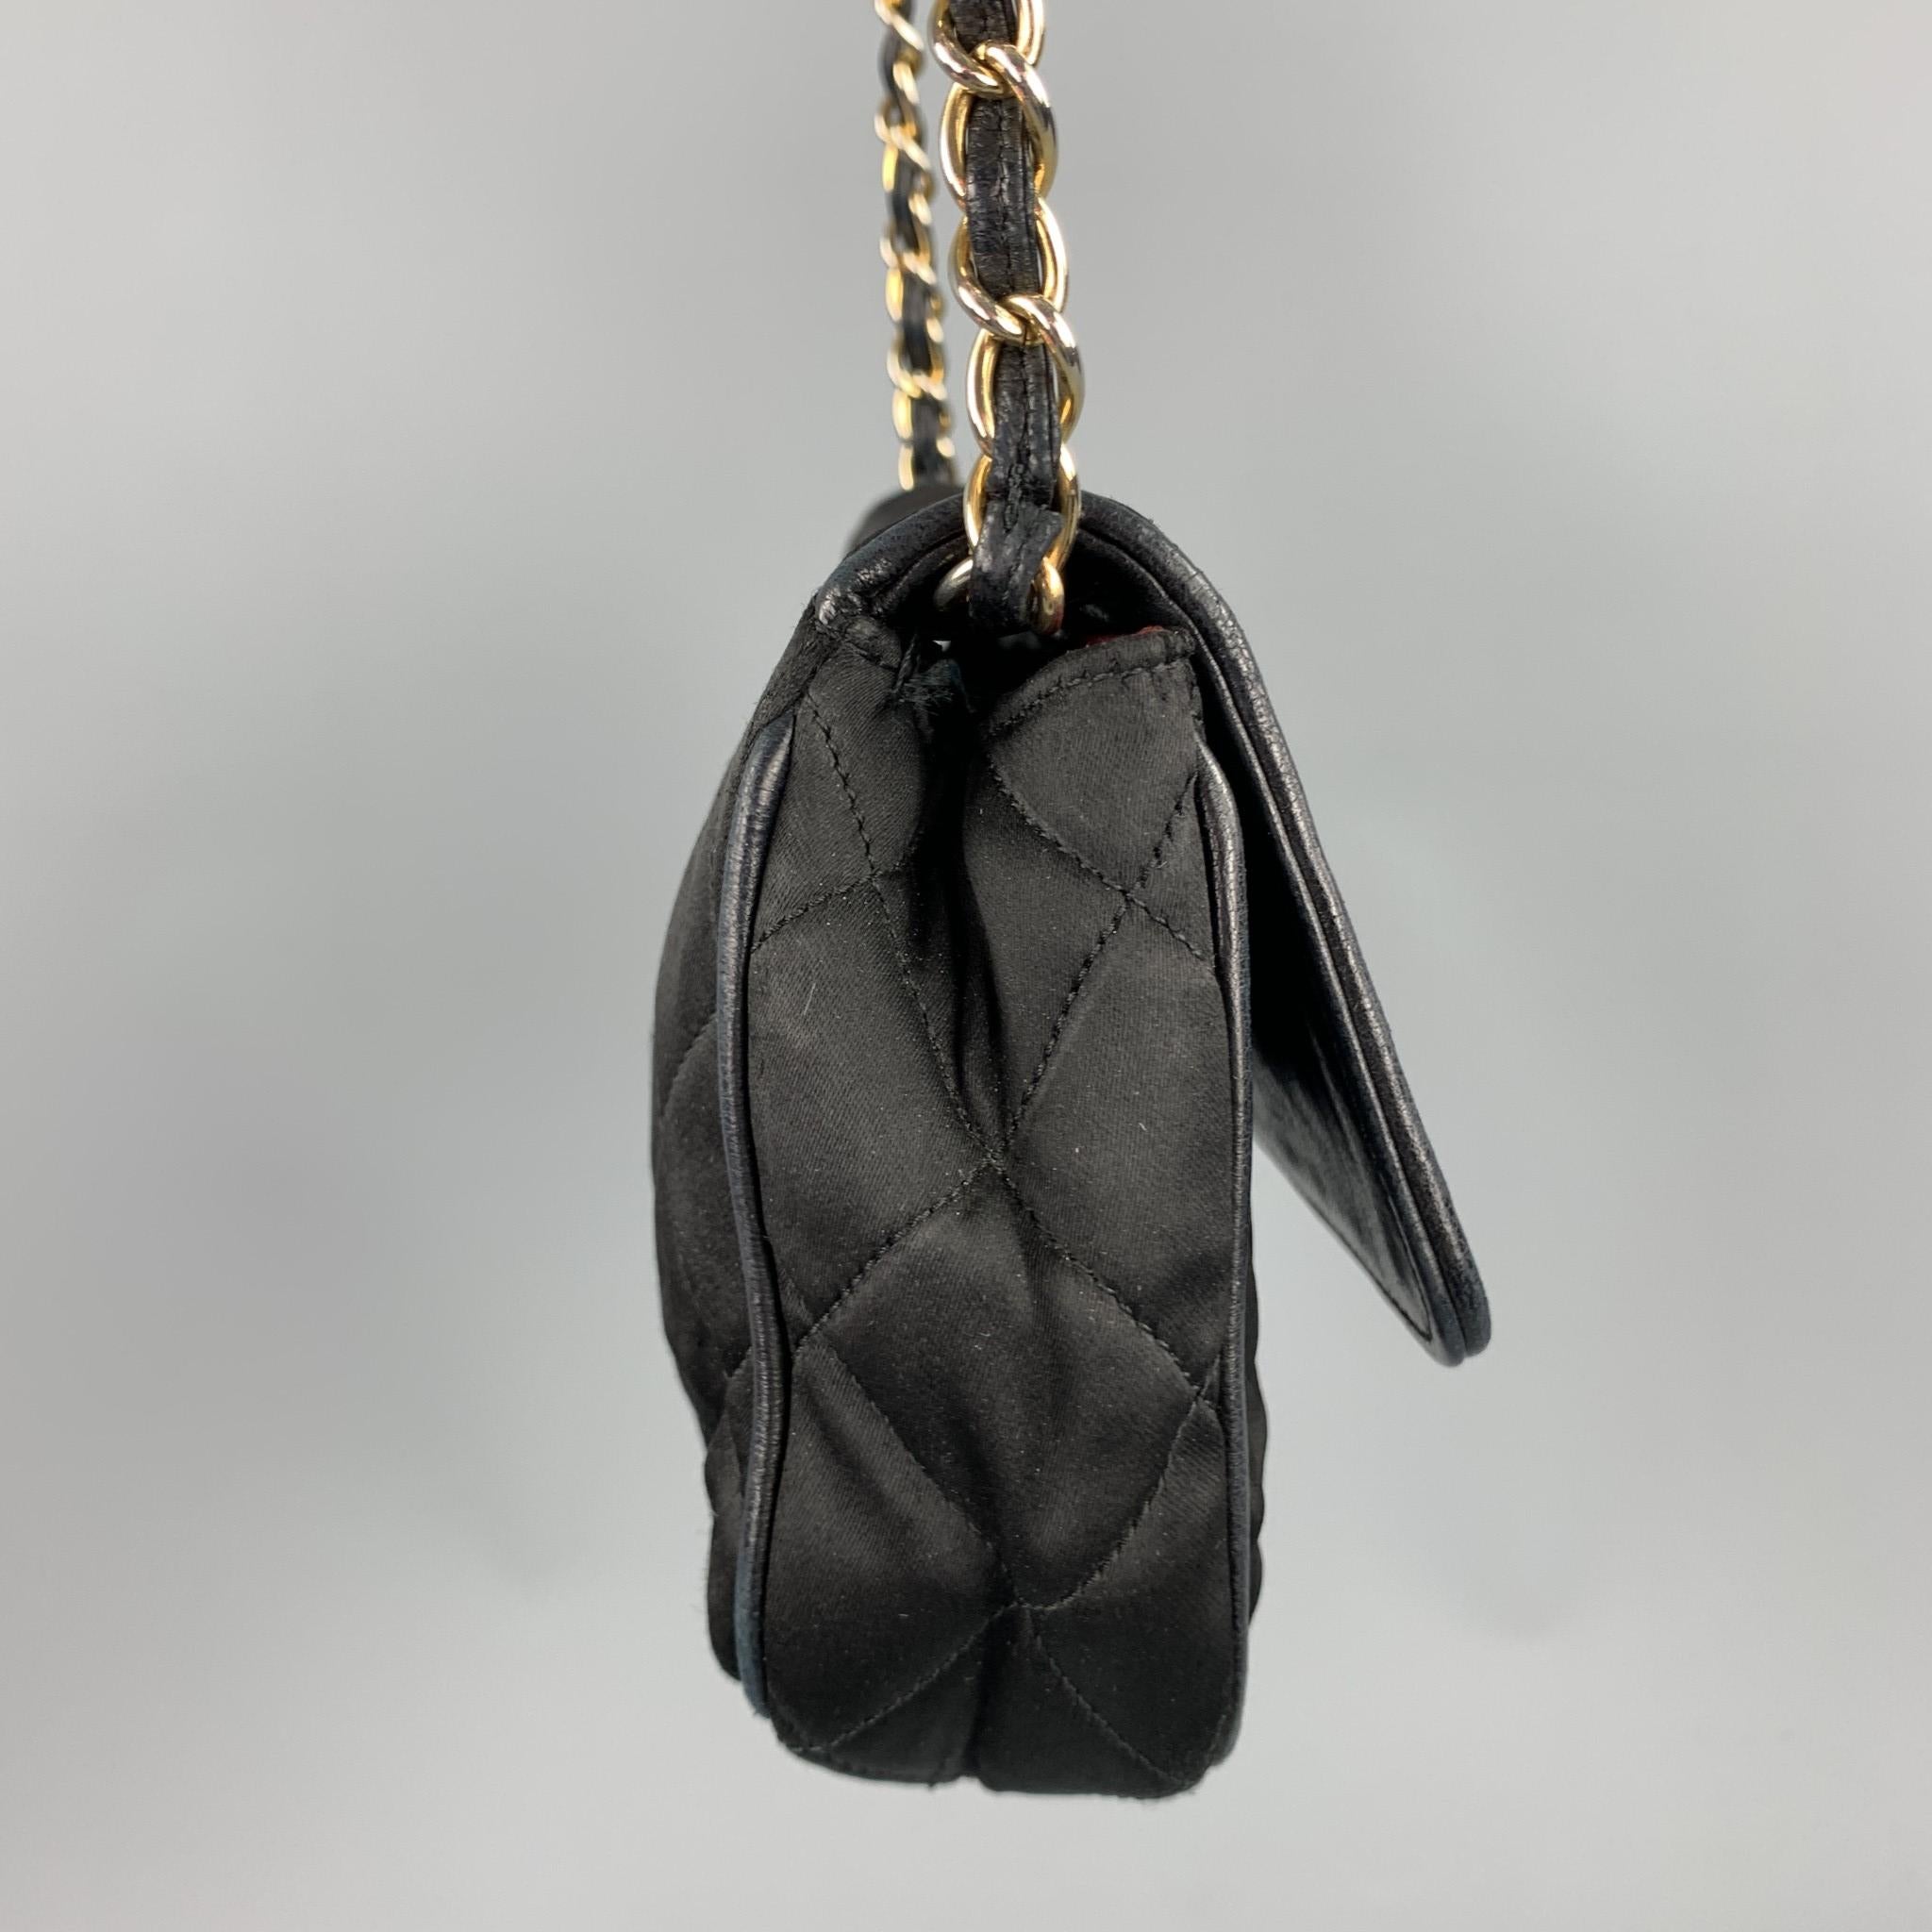 Vintage CHANEL Black Quilted Nylon Leather Trim Cross Body Handbag 2